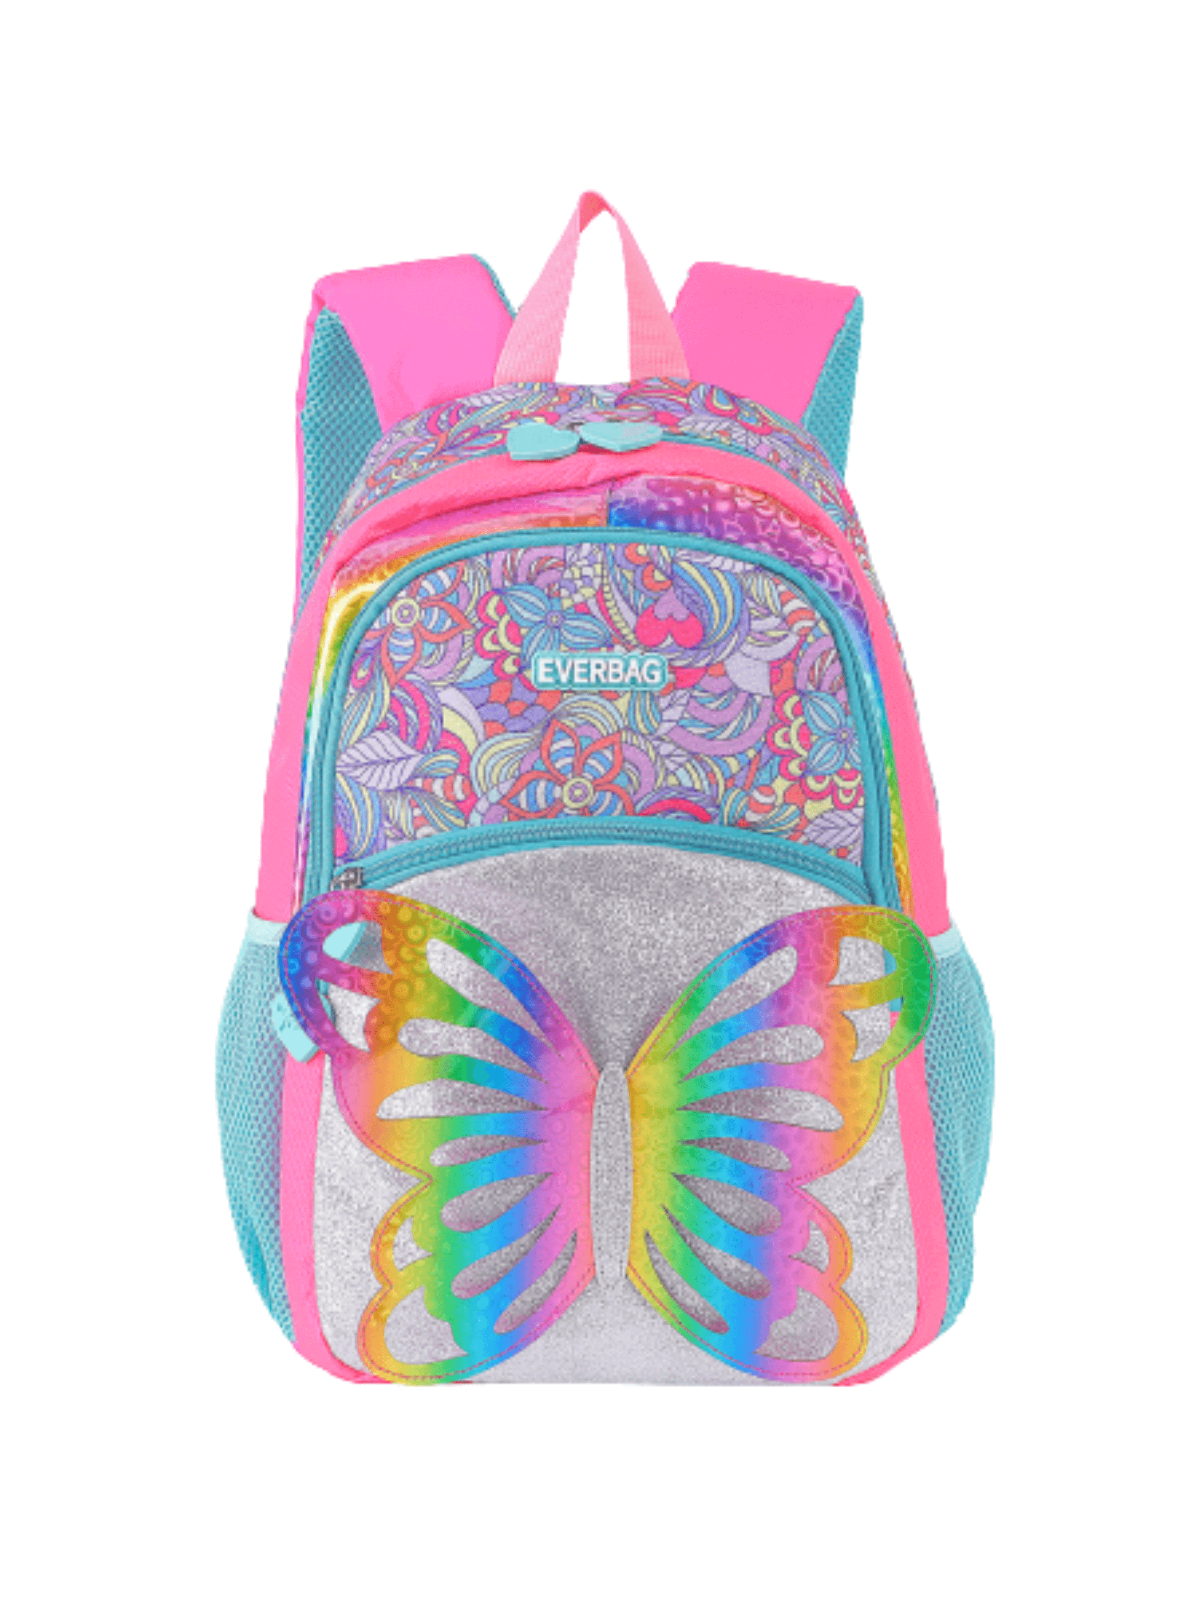 Pink Preschool Backpack for Girls